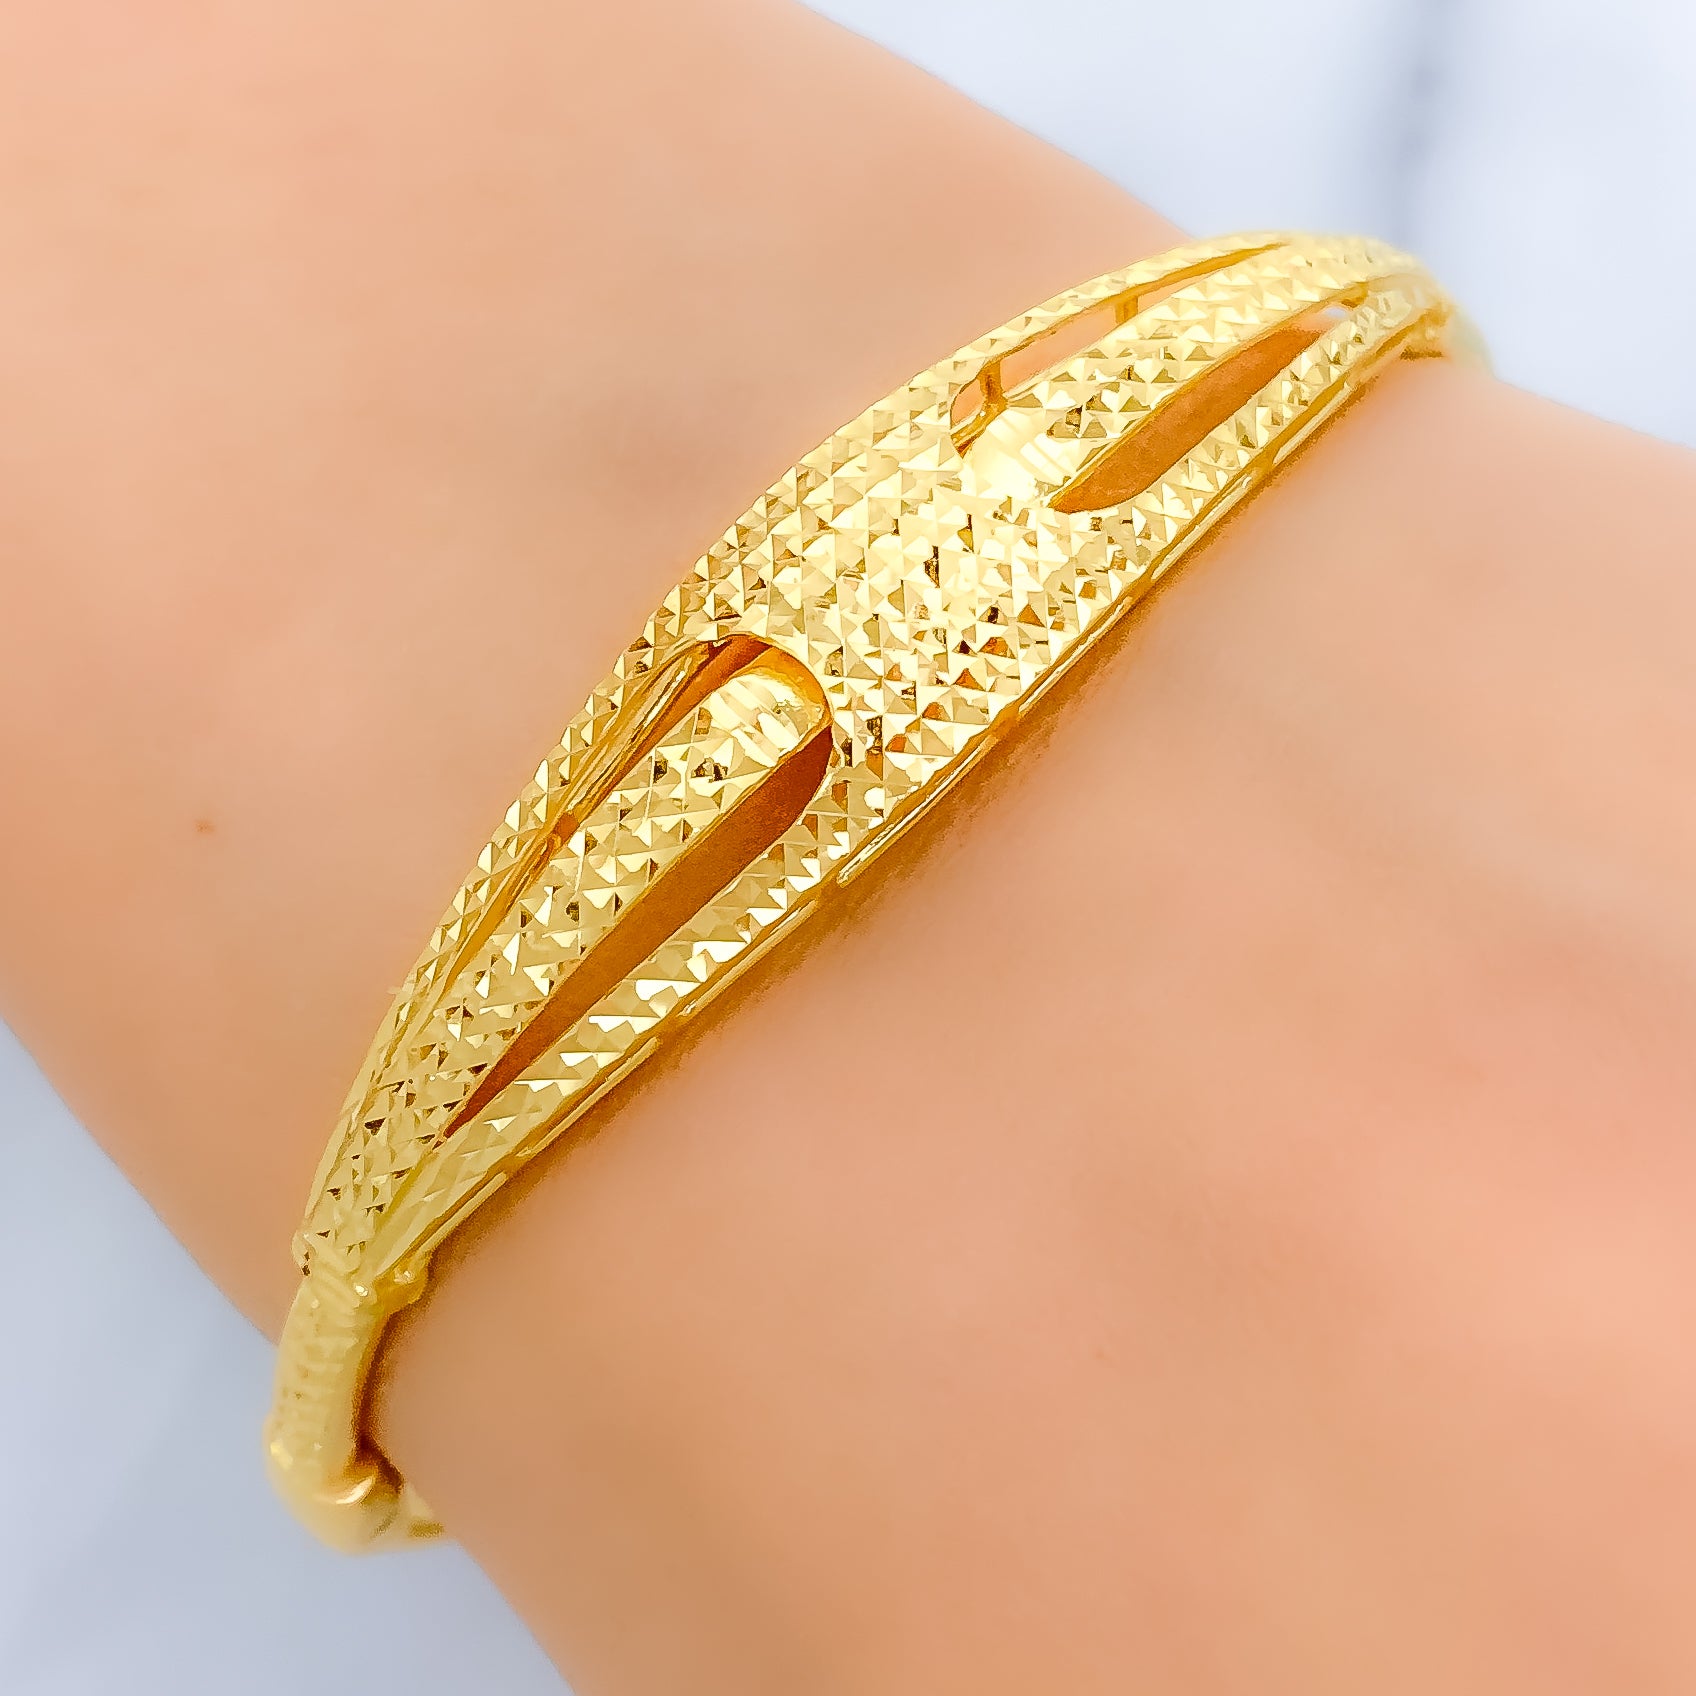 Joyalukkas - With meticulous details, this diamond bracelet evokes  contemporary wonder. Discover more modern bracelets online. Shop Online:  www.joyalukkas.com #Joyalukkas #Jewellery #OnlineShopping #Diamond #Gold # Bracelet #BuyNow | Facebook